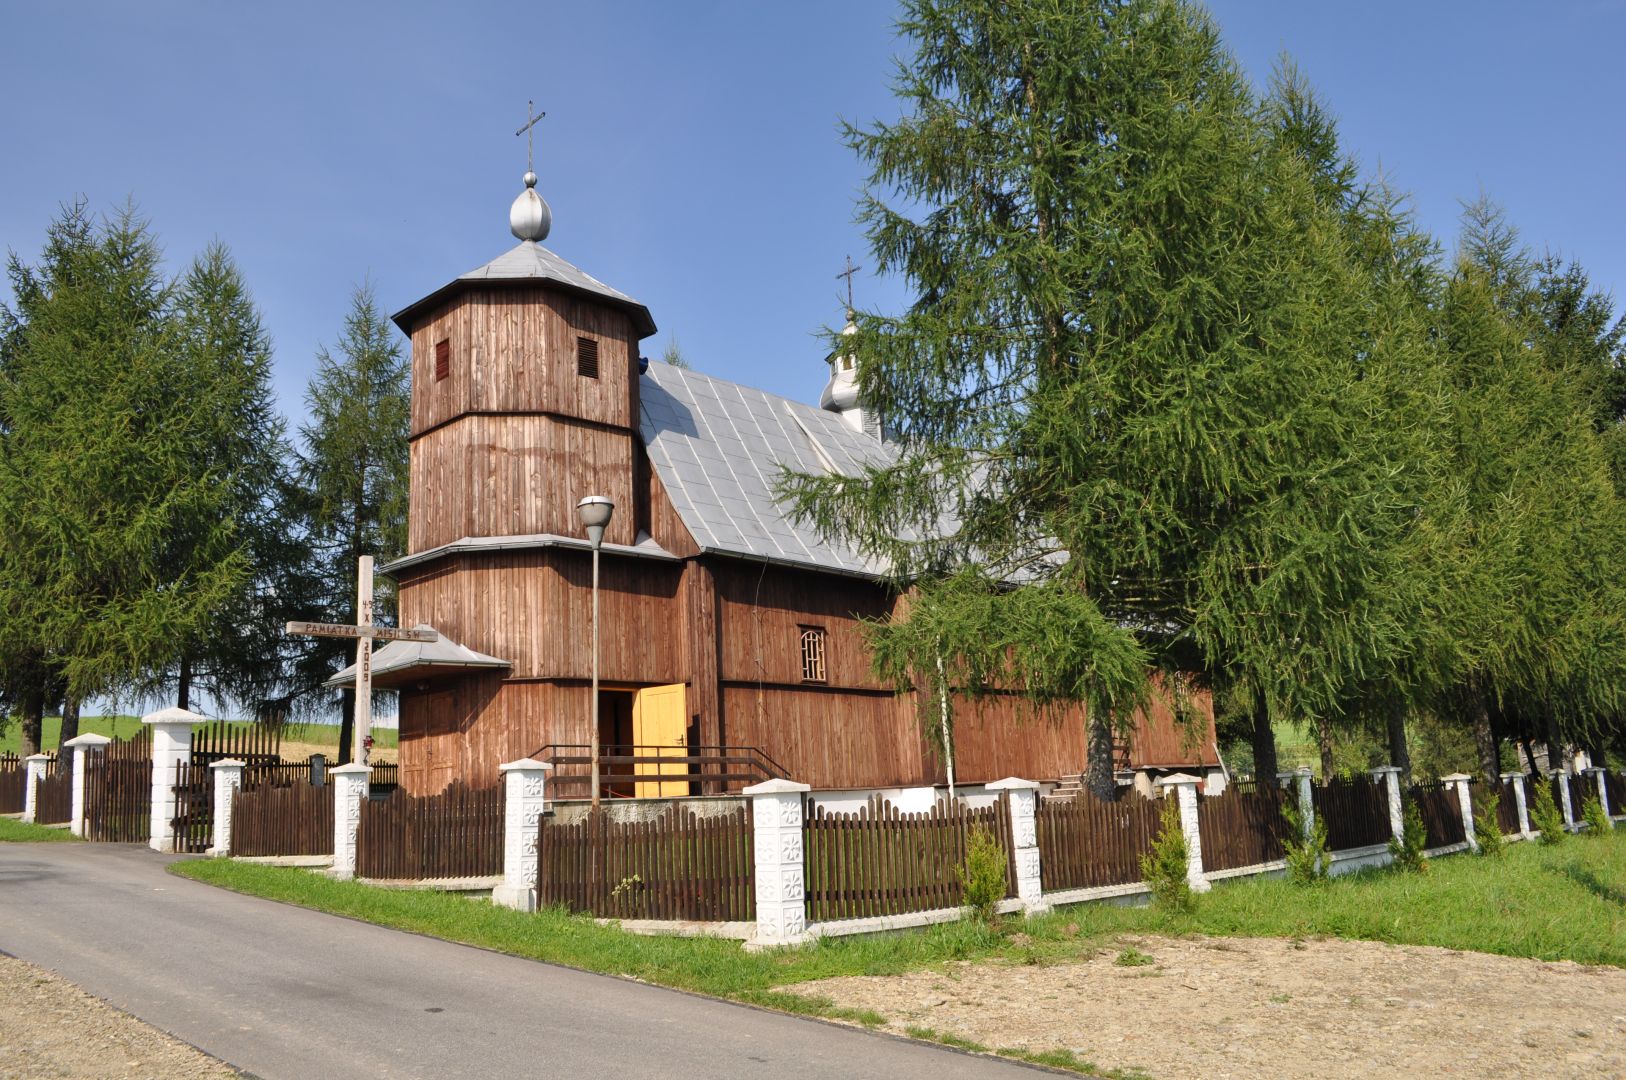 Orthodox church in Wańkowa